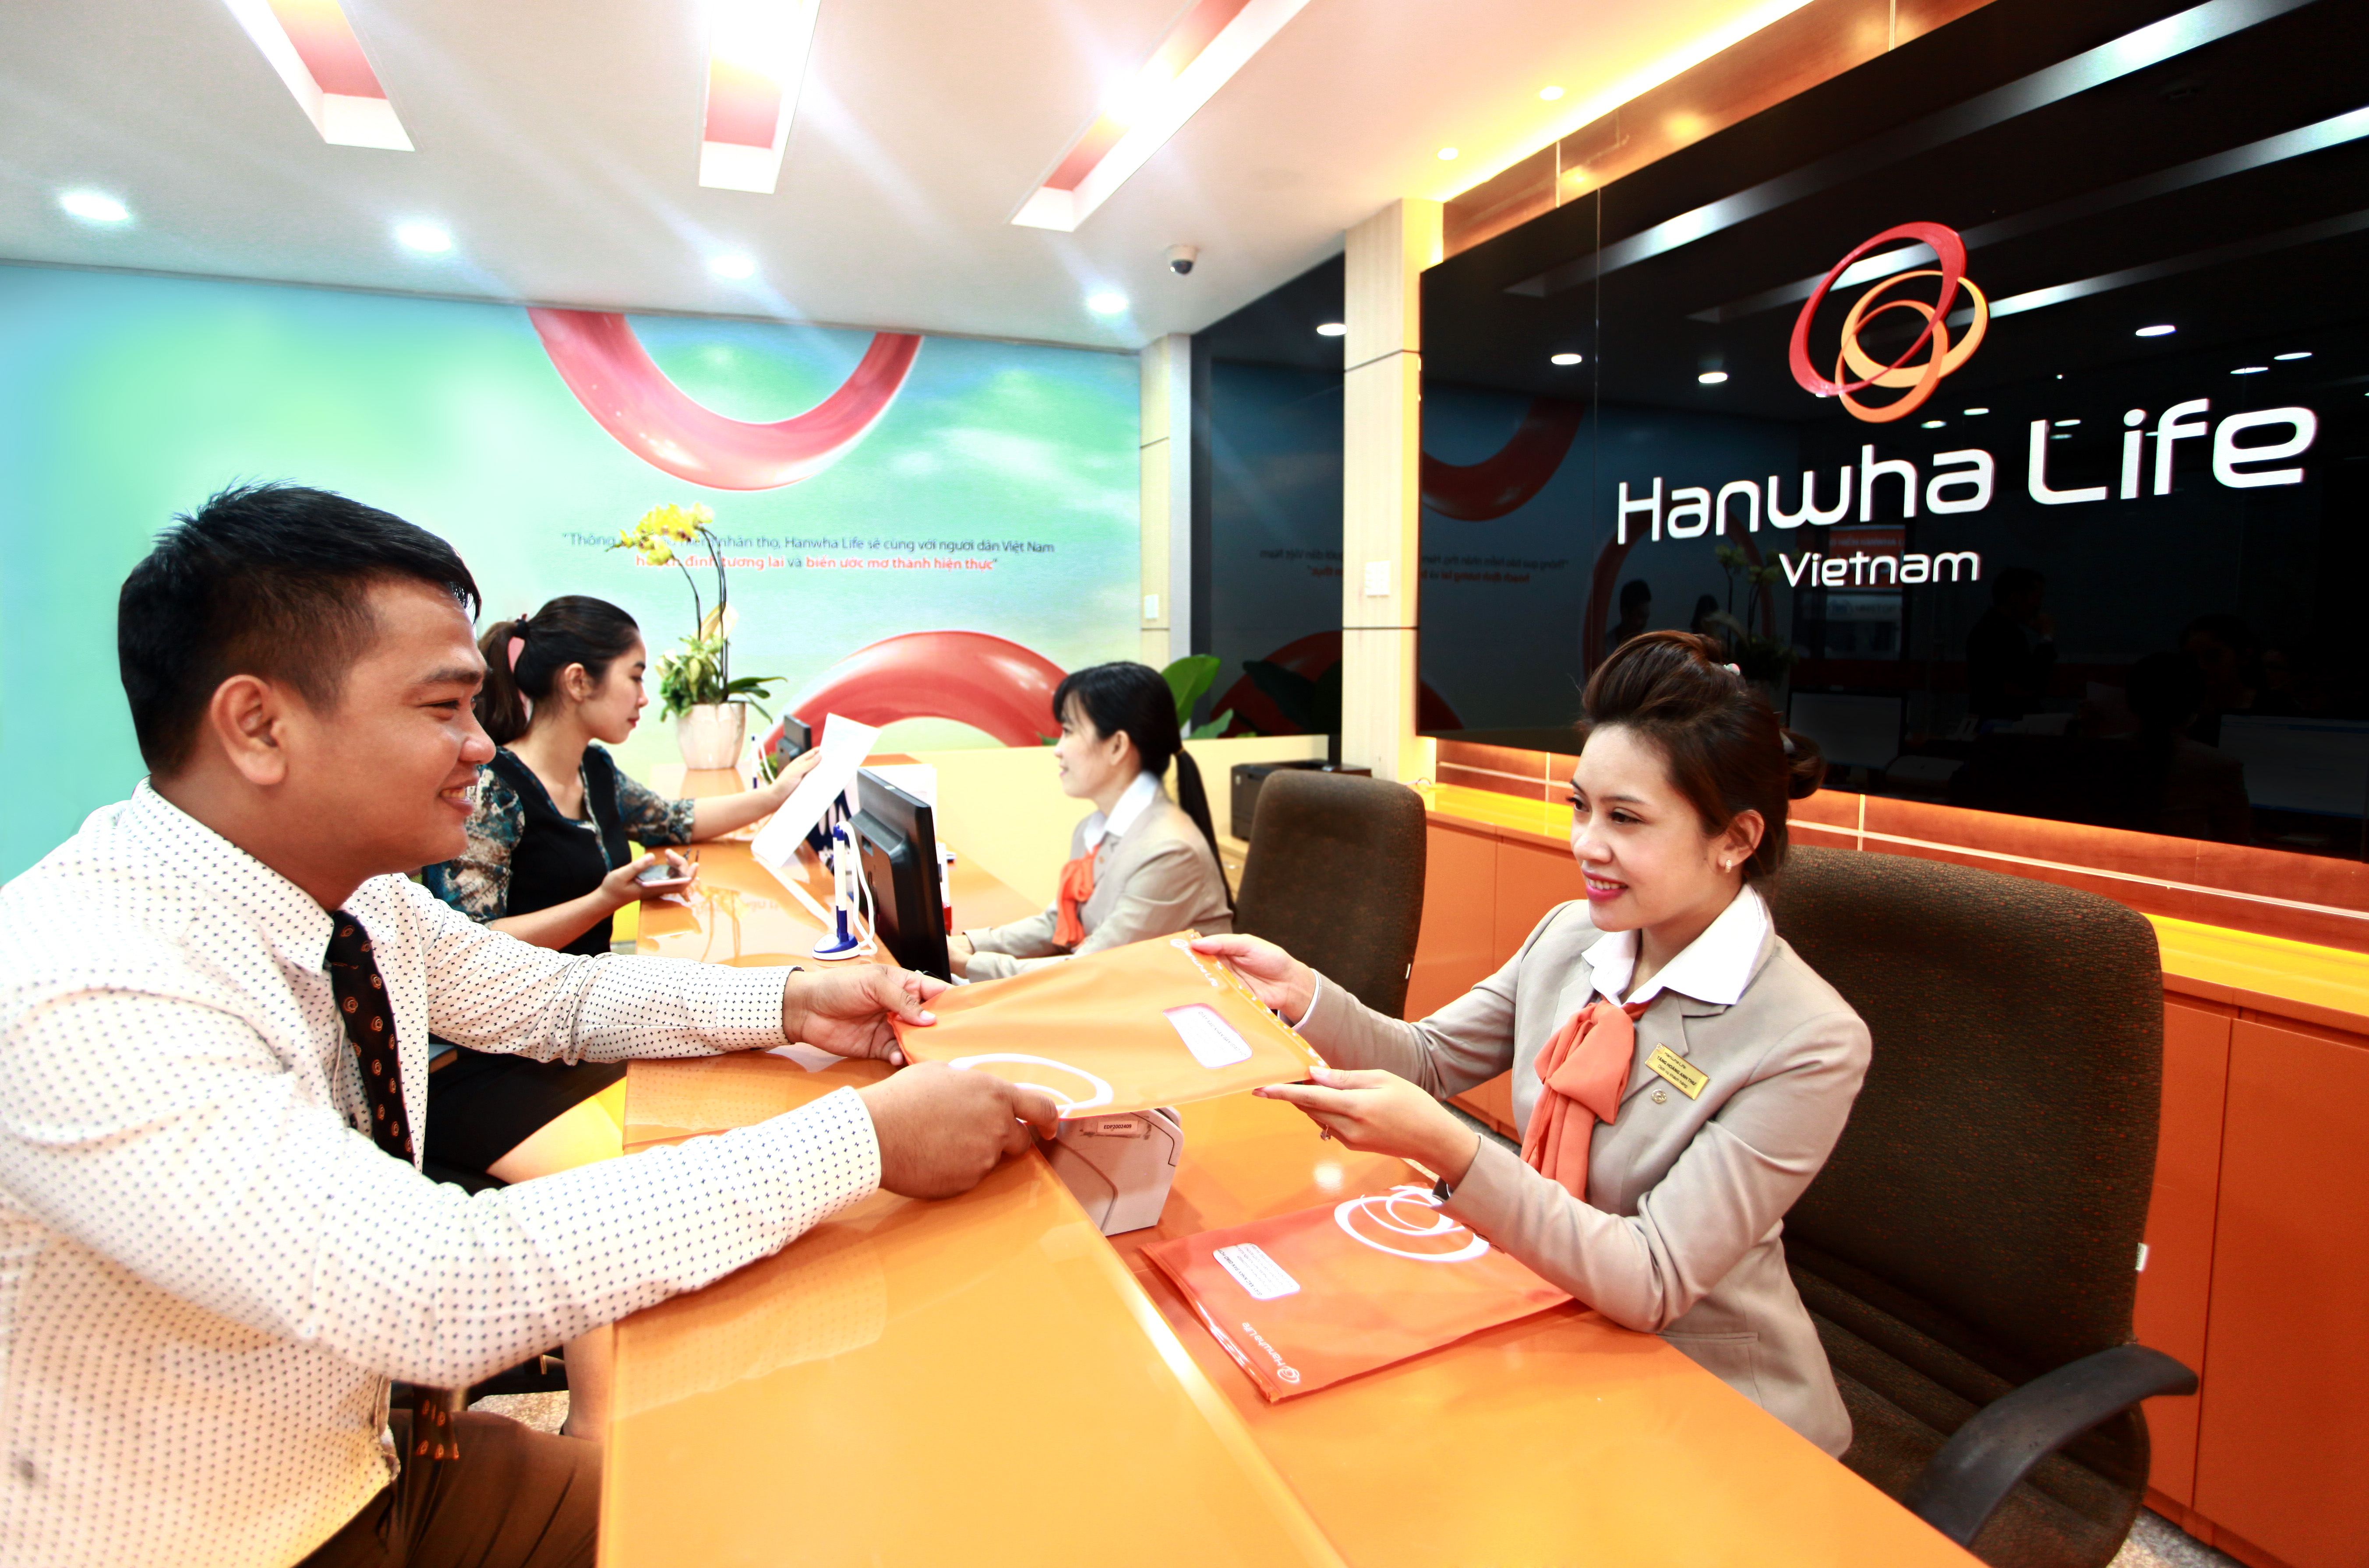 Hanwha Life Vietnam reports outstanding third quarter results